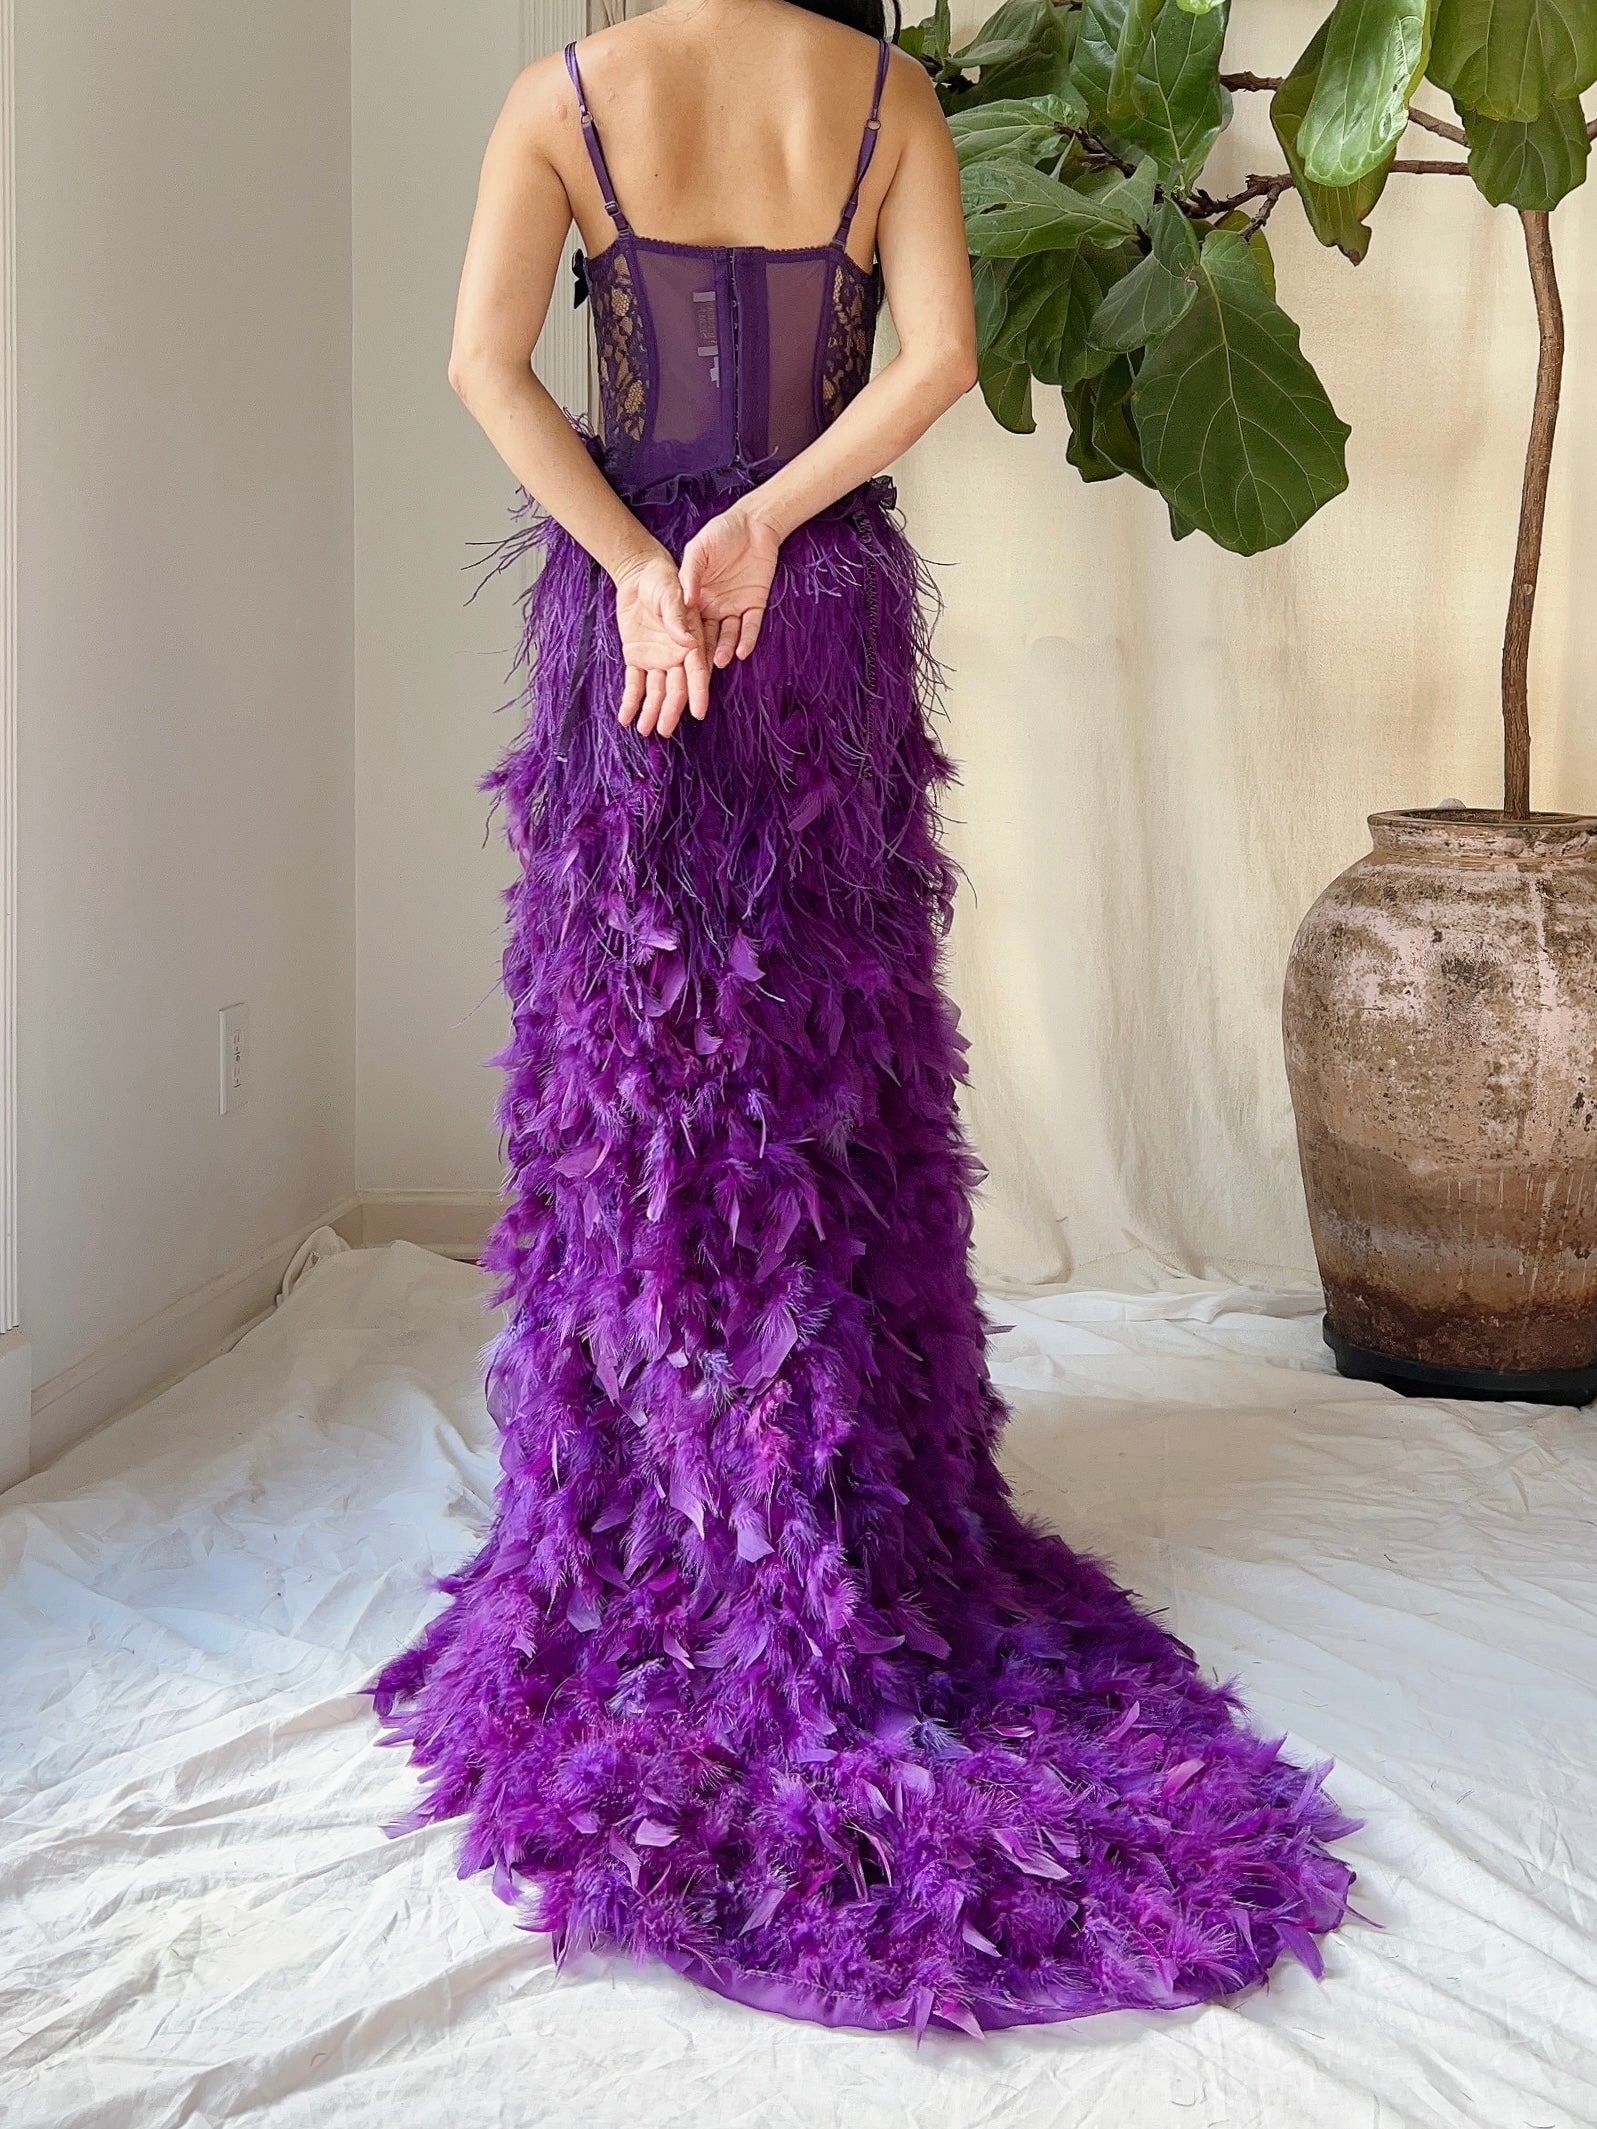 Vintage Purple Feather Skirt - S-M